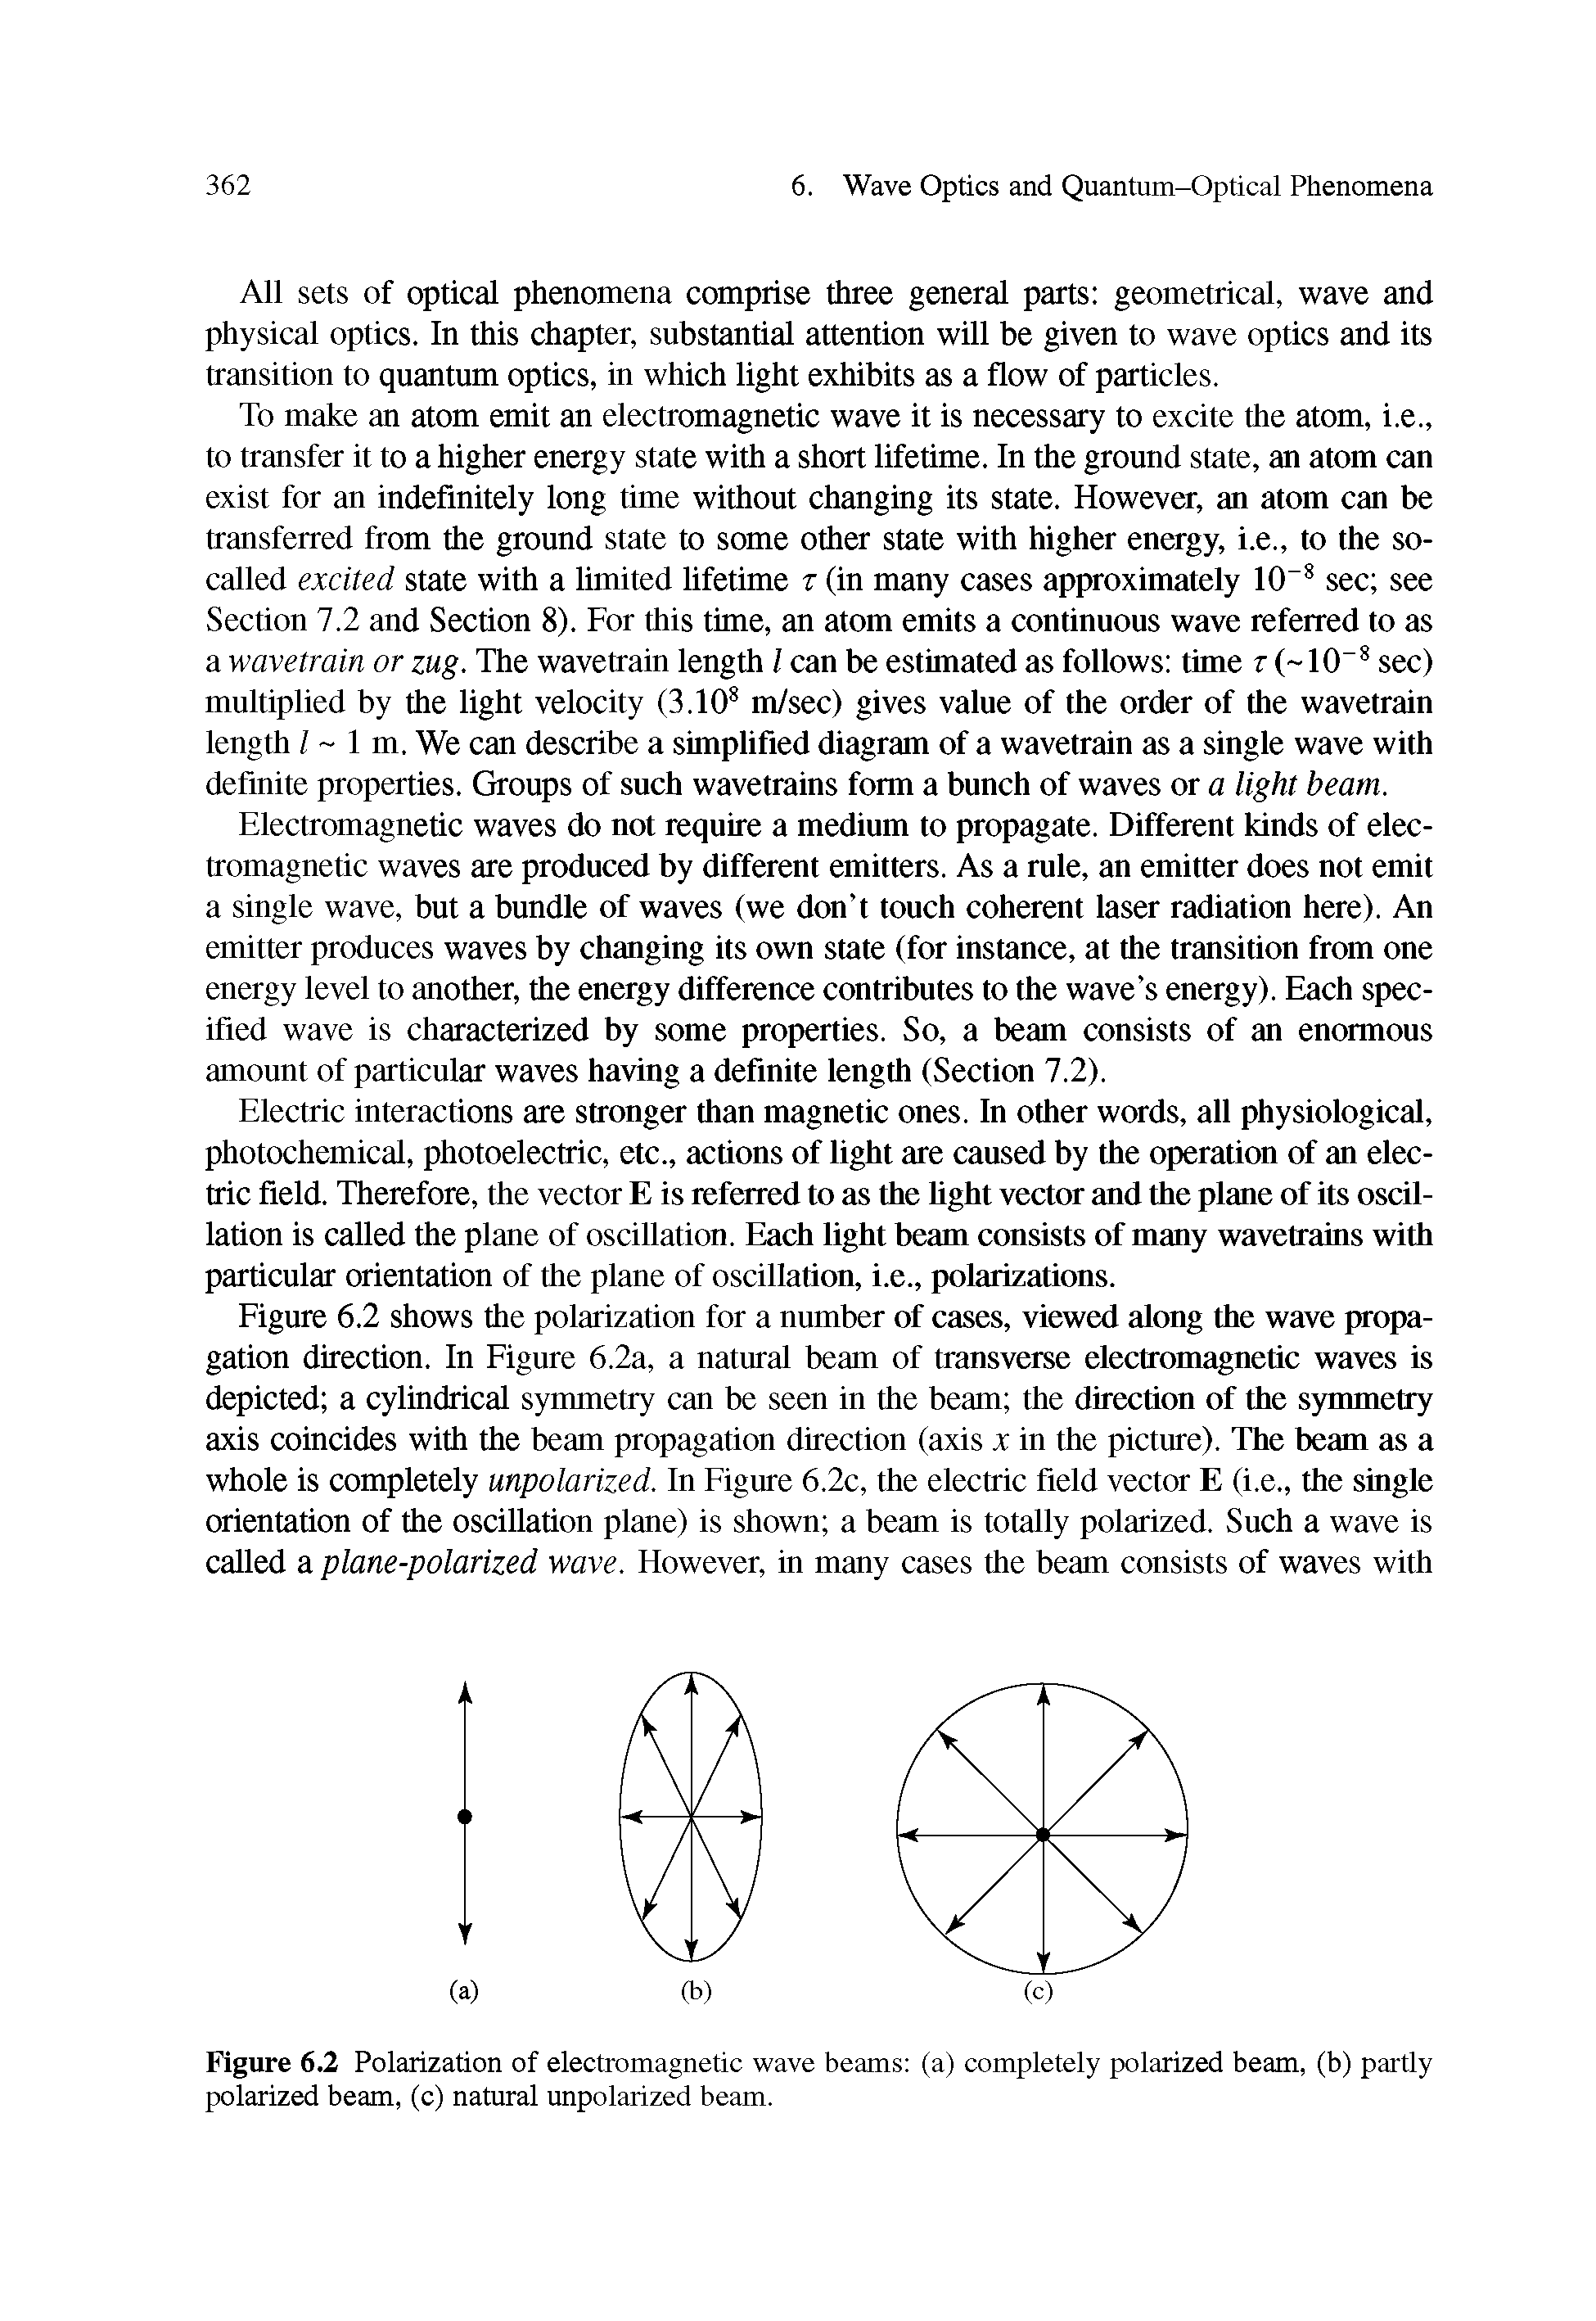 Figure 6.2 Polarization of electromagnetic wave beams (a) completely polarized beam, (b) partly polarized beam, (c) natural unpolarized beam.